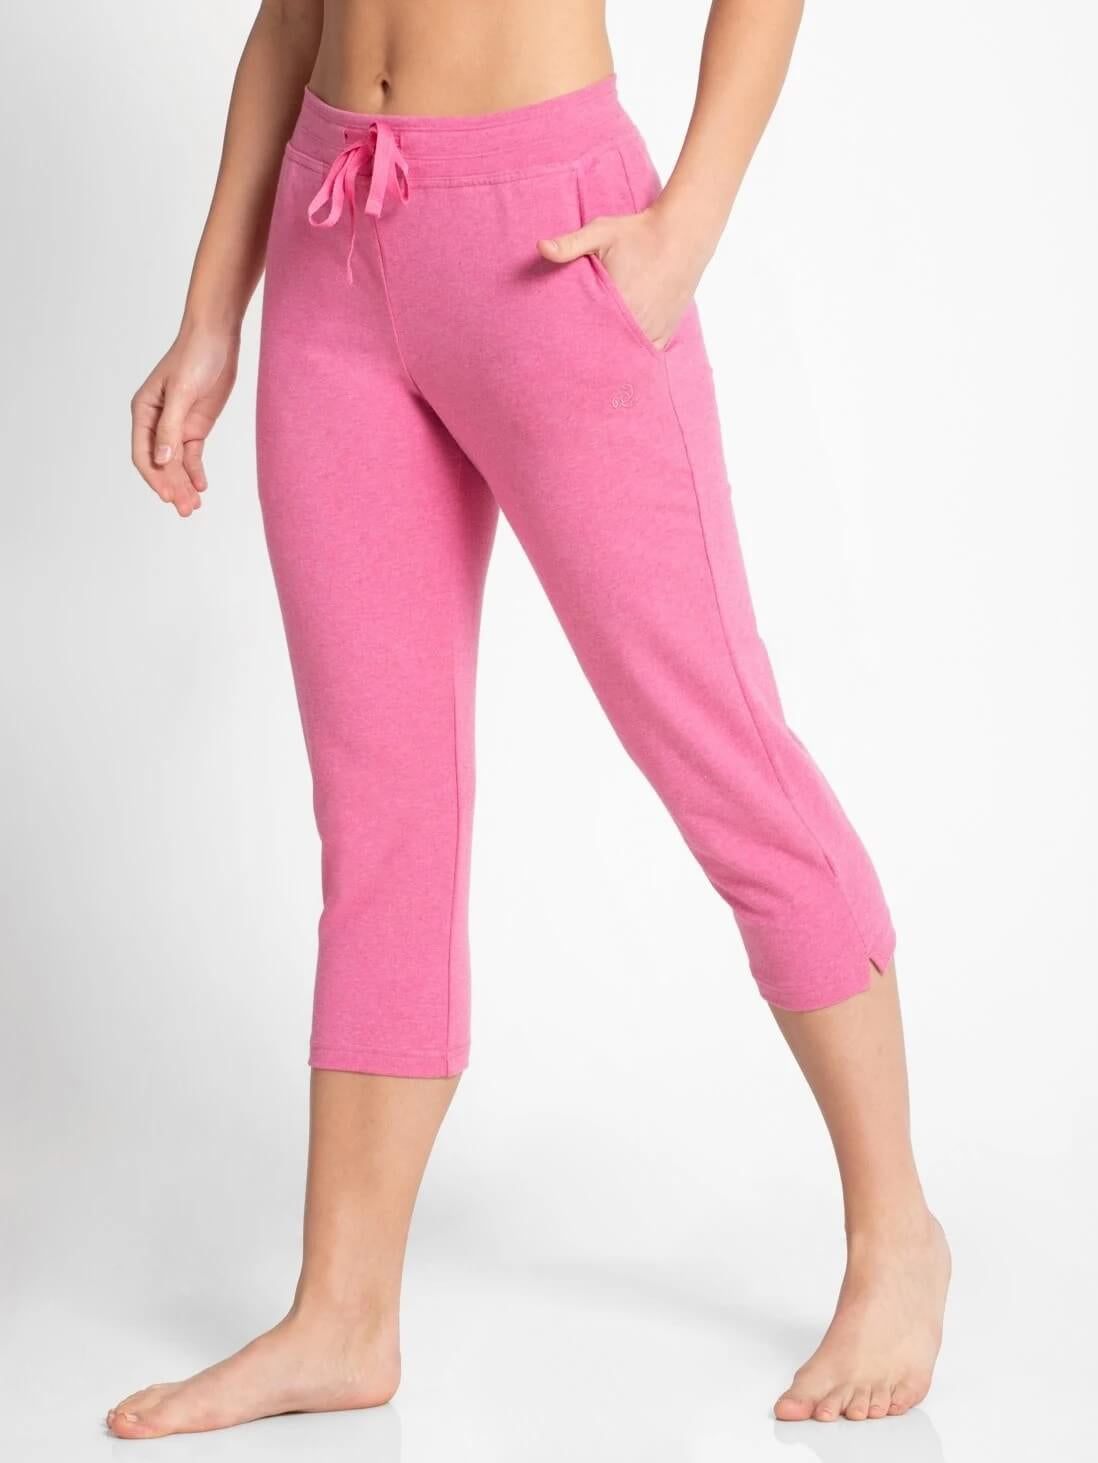 Jockey Pink Capri Pants for Women #1300 [New Fit]